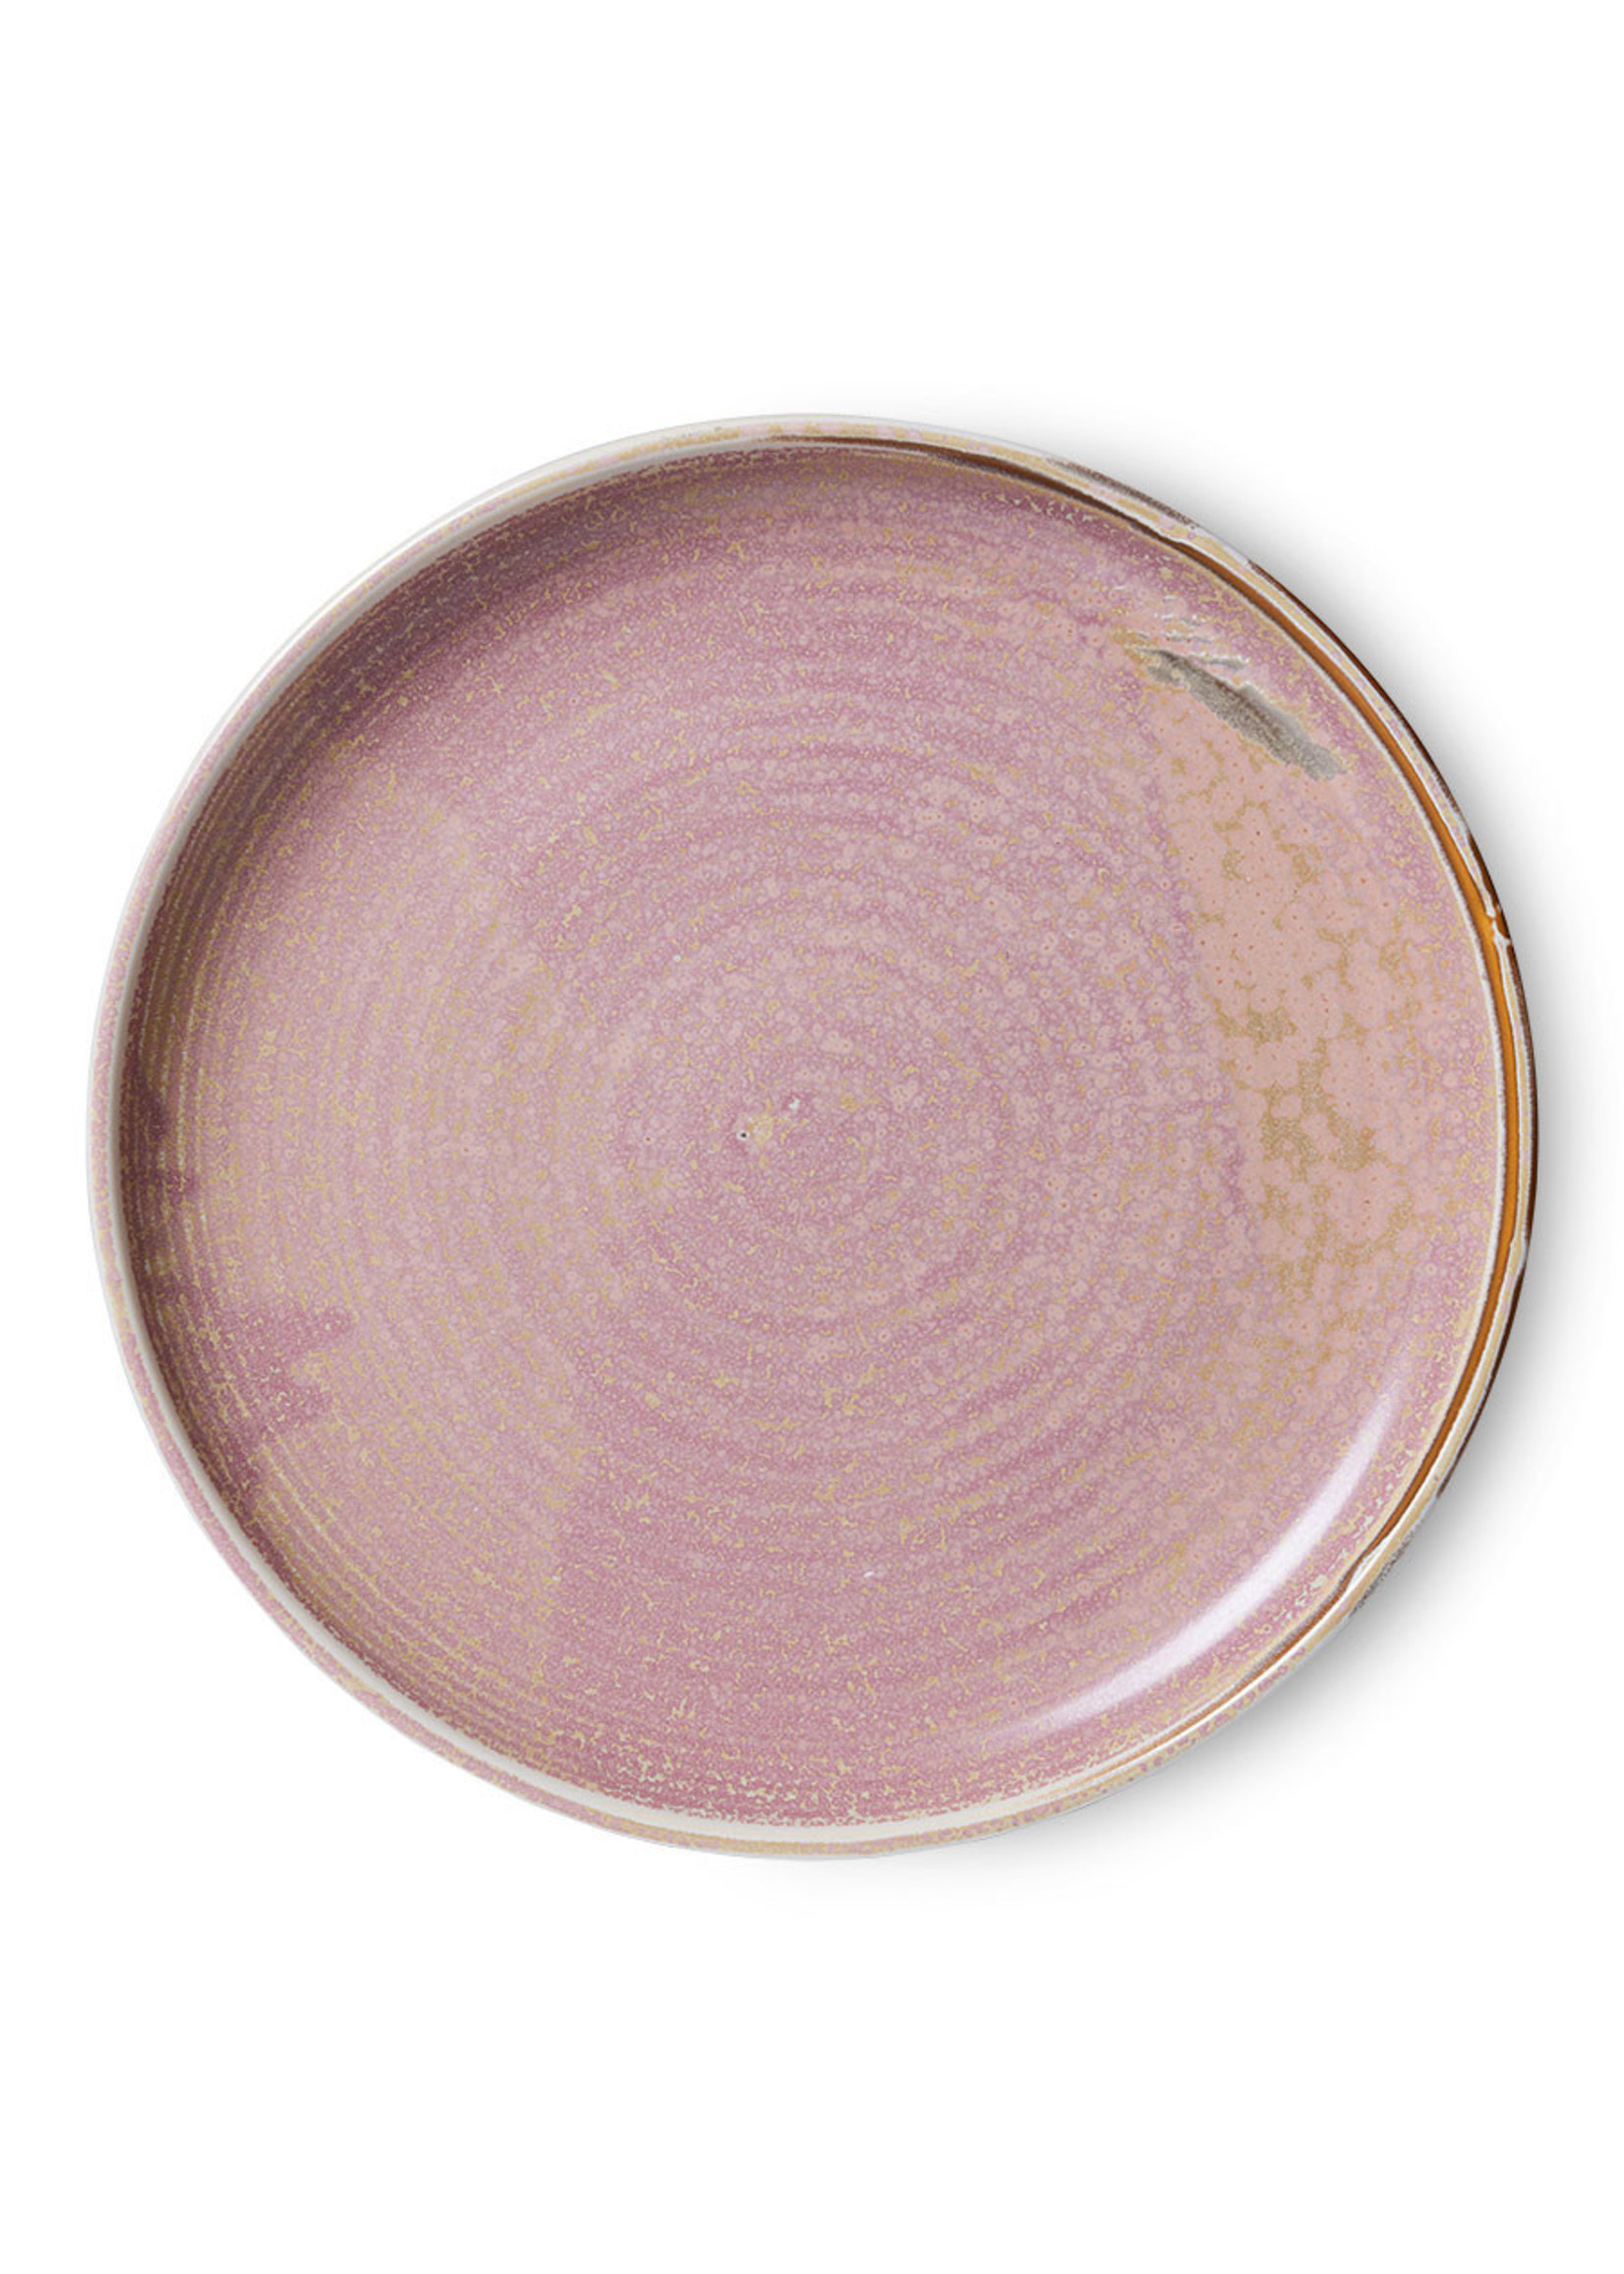 HKliving Chef ceramics: dinner plate, rustic pink